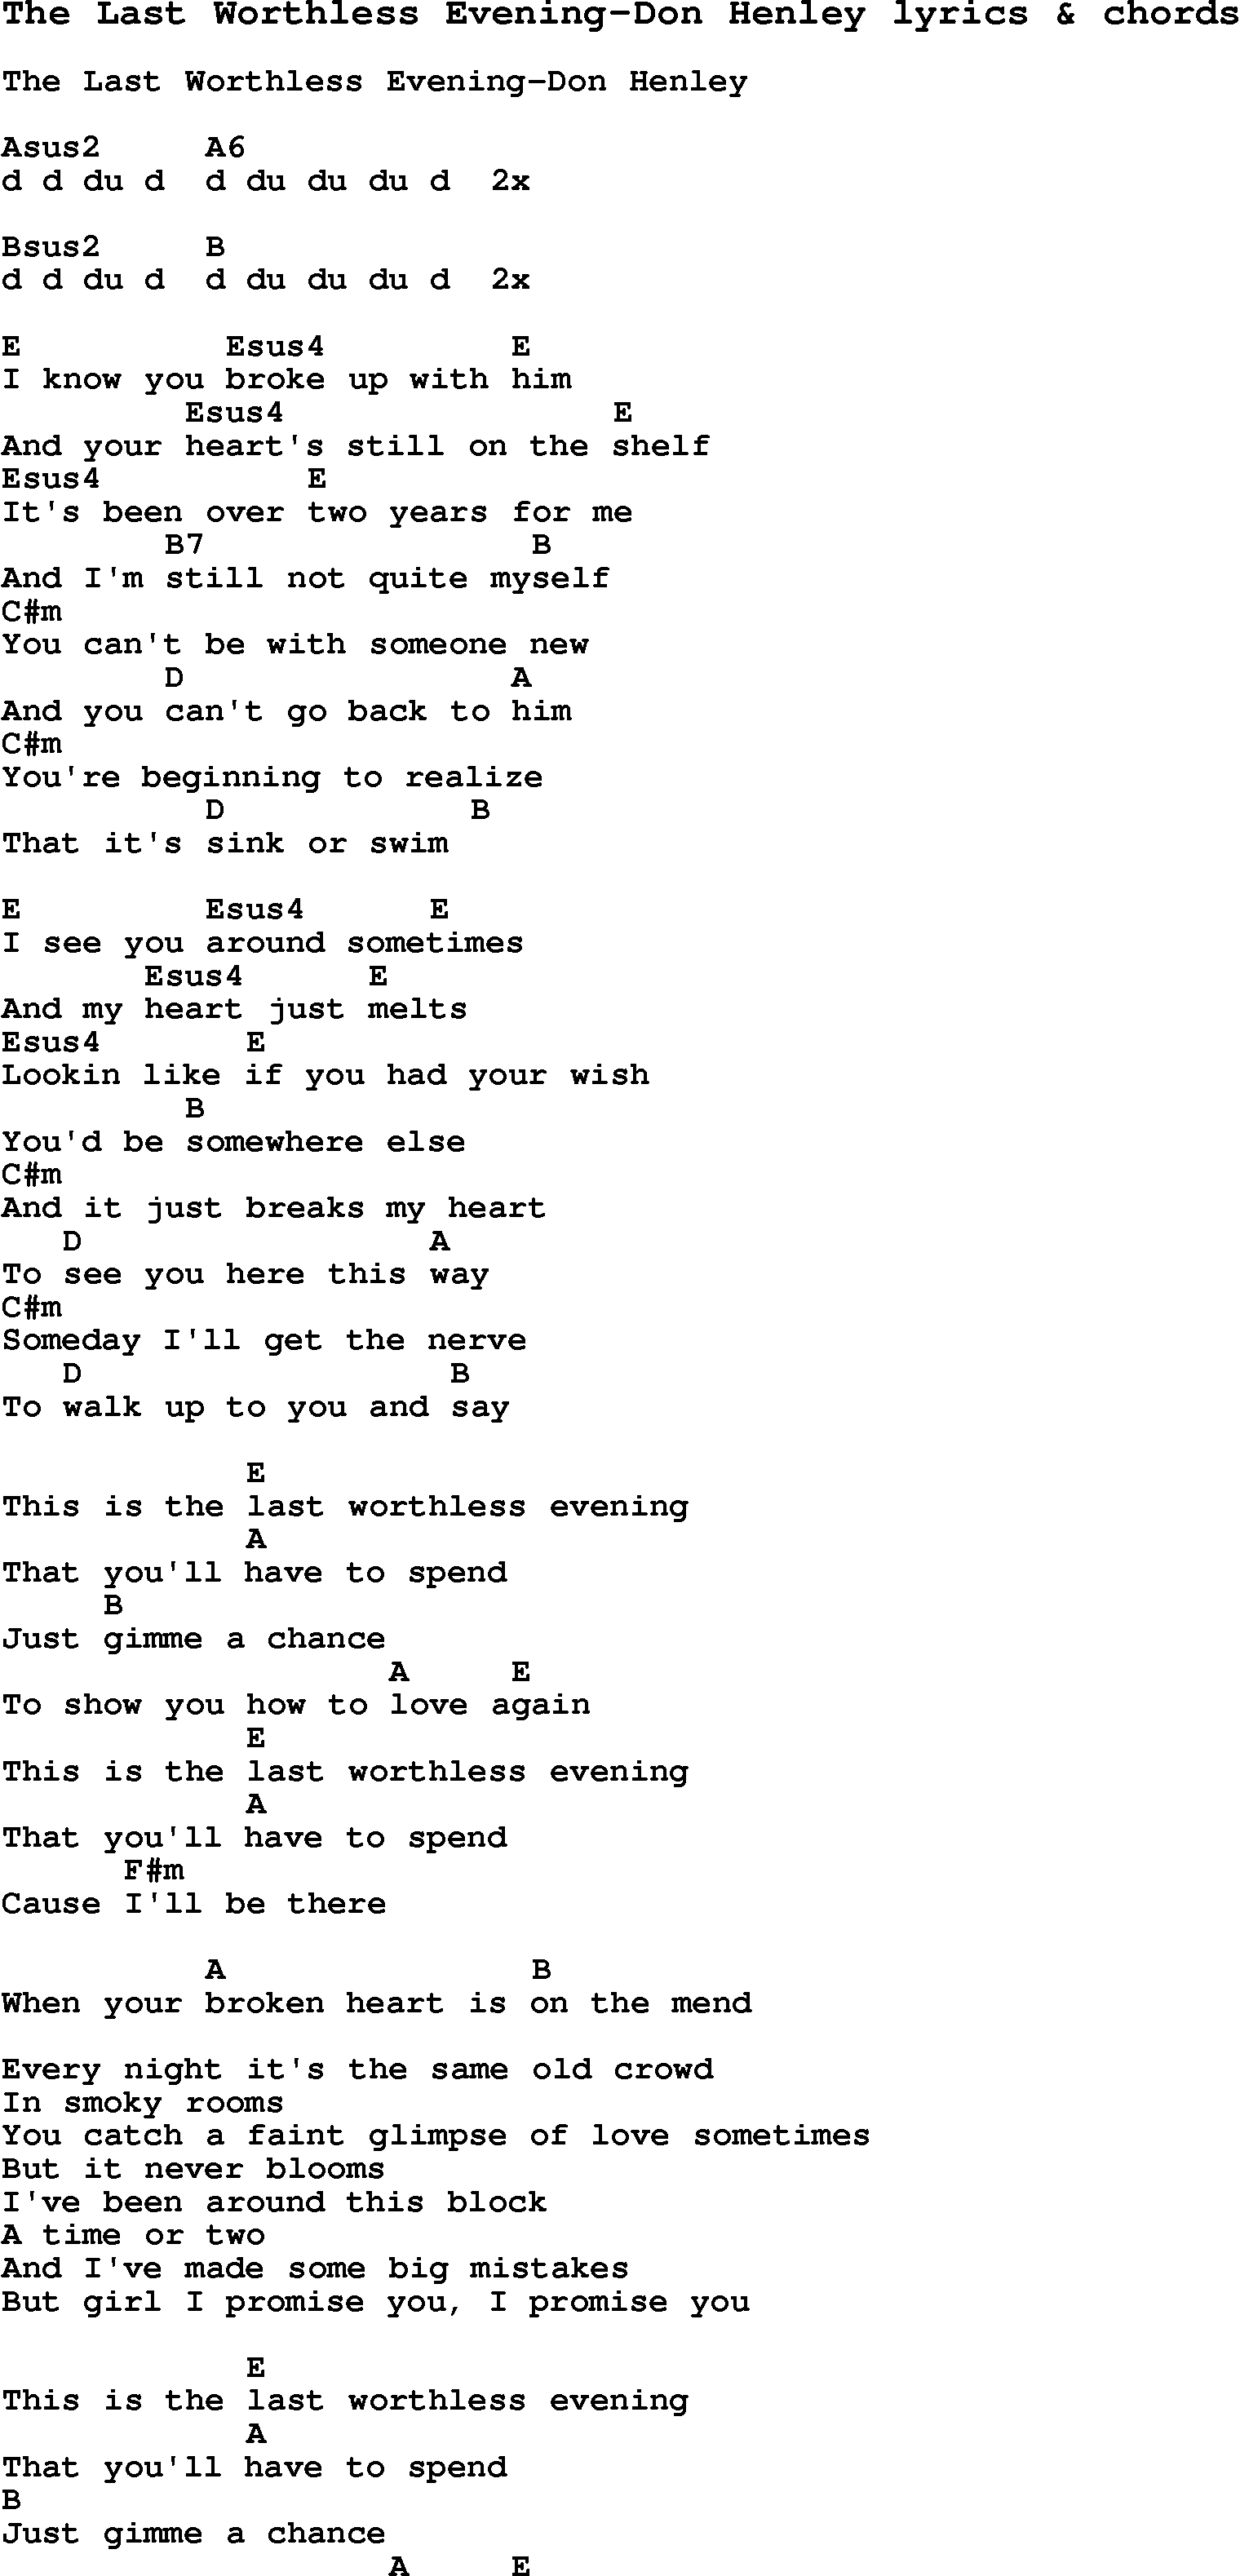 Love Song Lyrics for: The Last Worthless Evening-Don Henley with chords for Ukulele, Guitar Banjo etc.